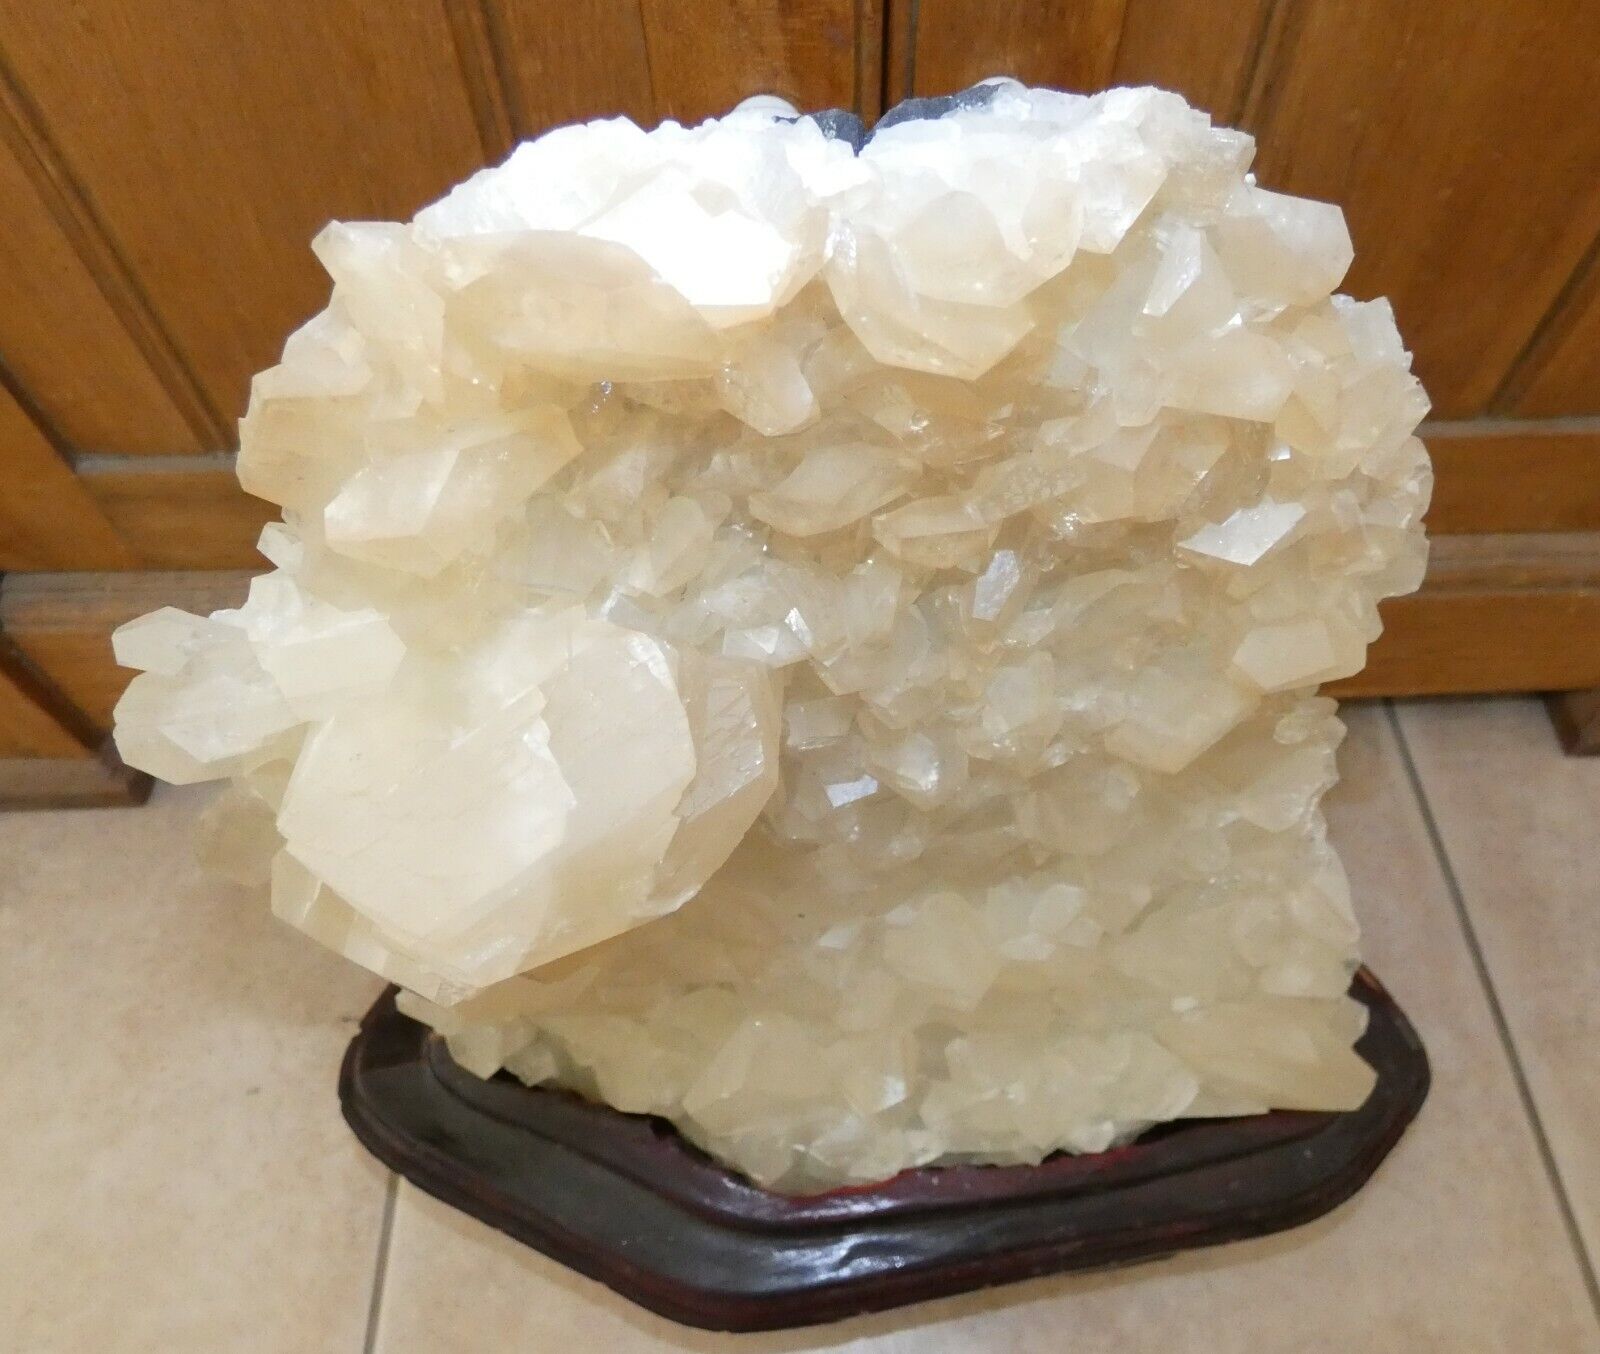 MASSIVE Calcite Crystal Mineral Display - Zen Decor, Meditation, Earth Science